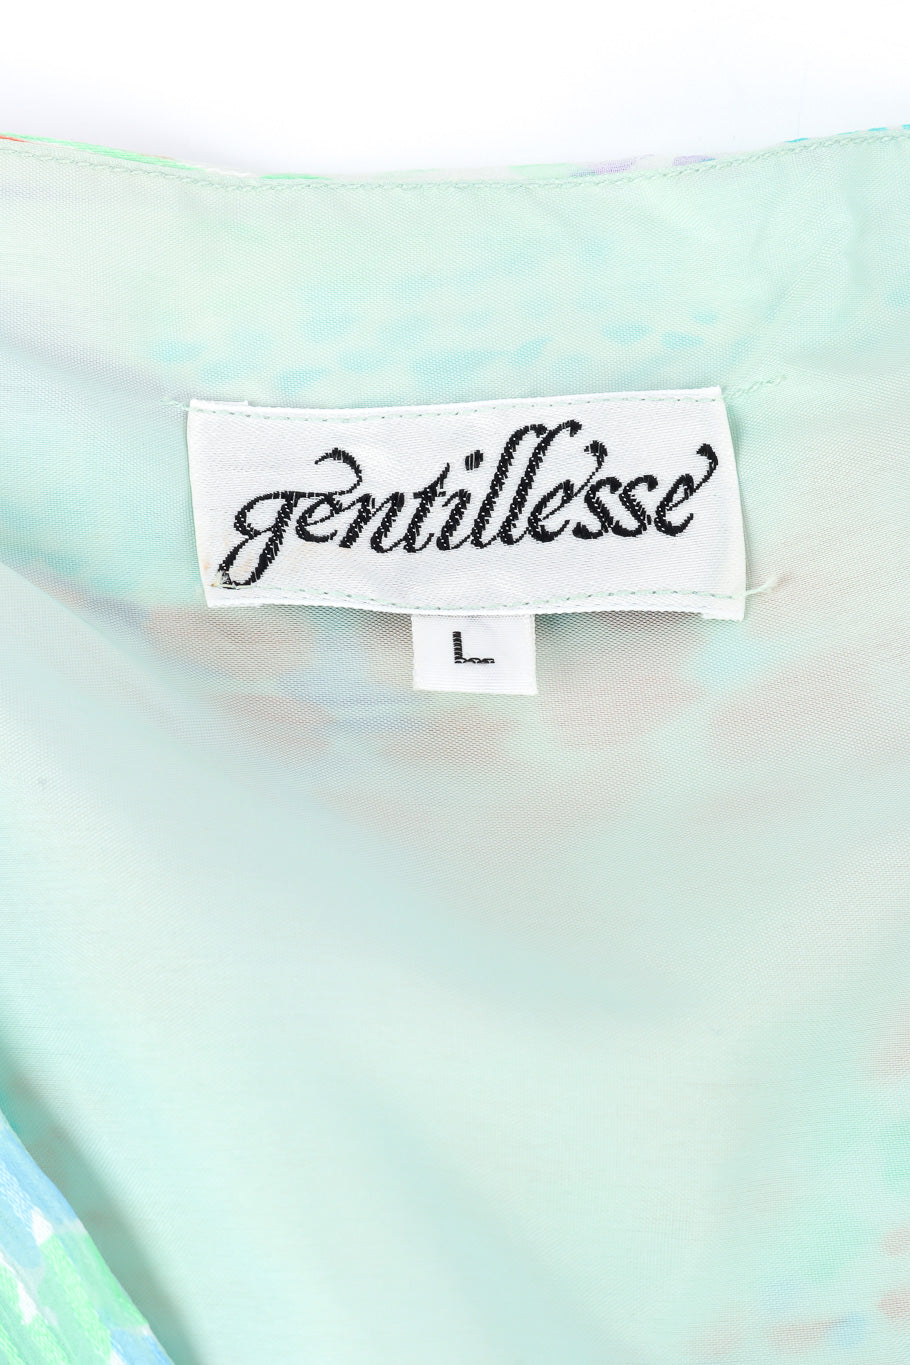 Vintage Gentillesse Brushstroke Silk Blouson Dress label closeup @Recessla